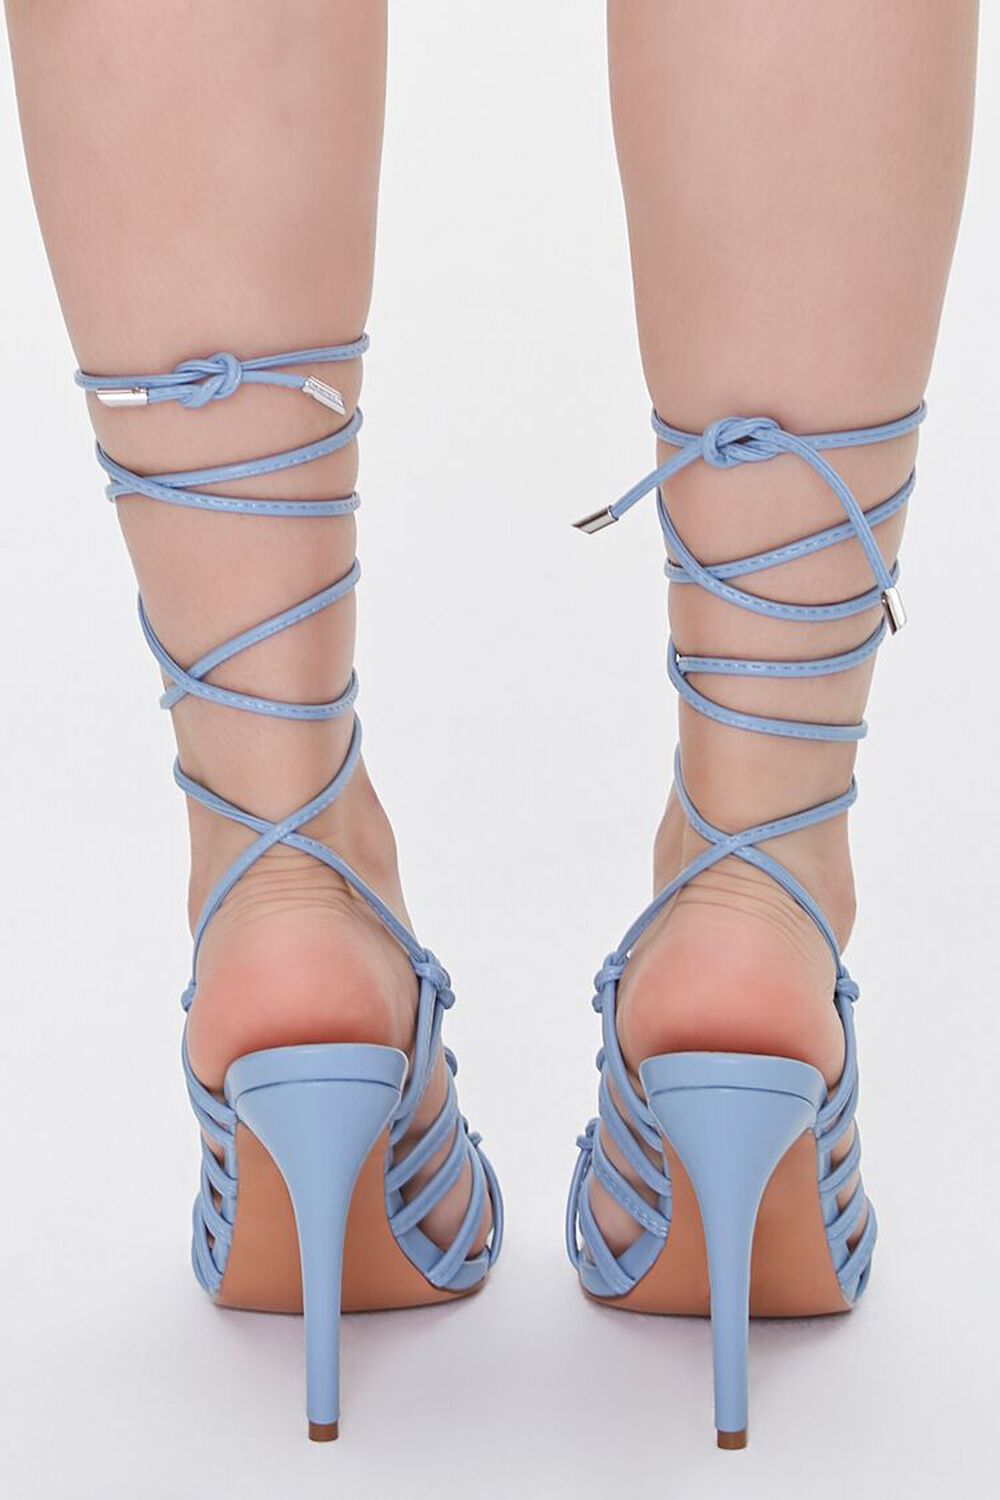 BLUE Gladiator Stiletto High Heels, image 3